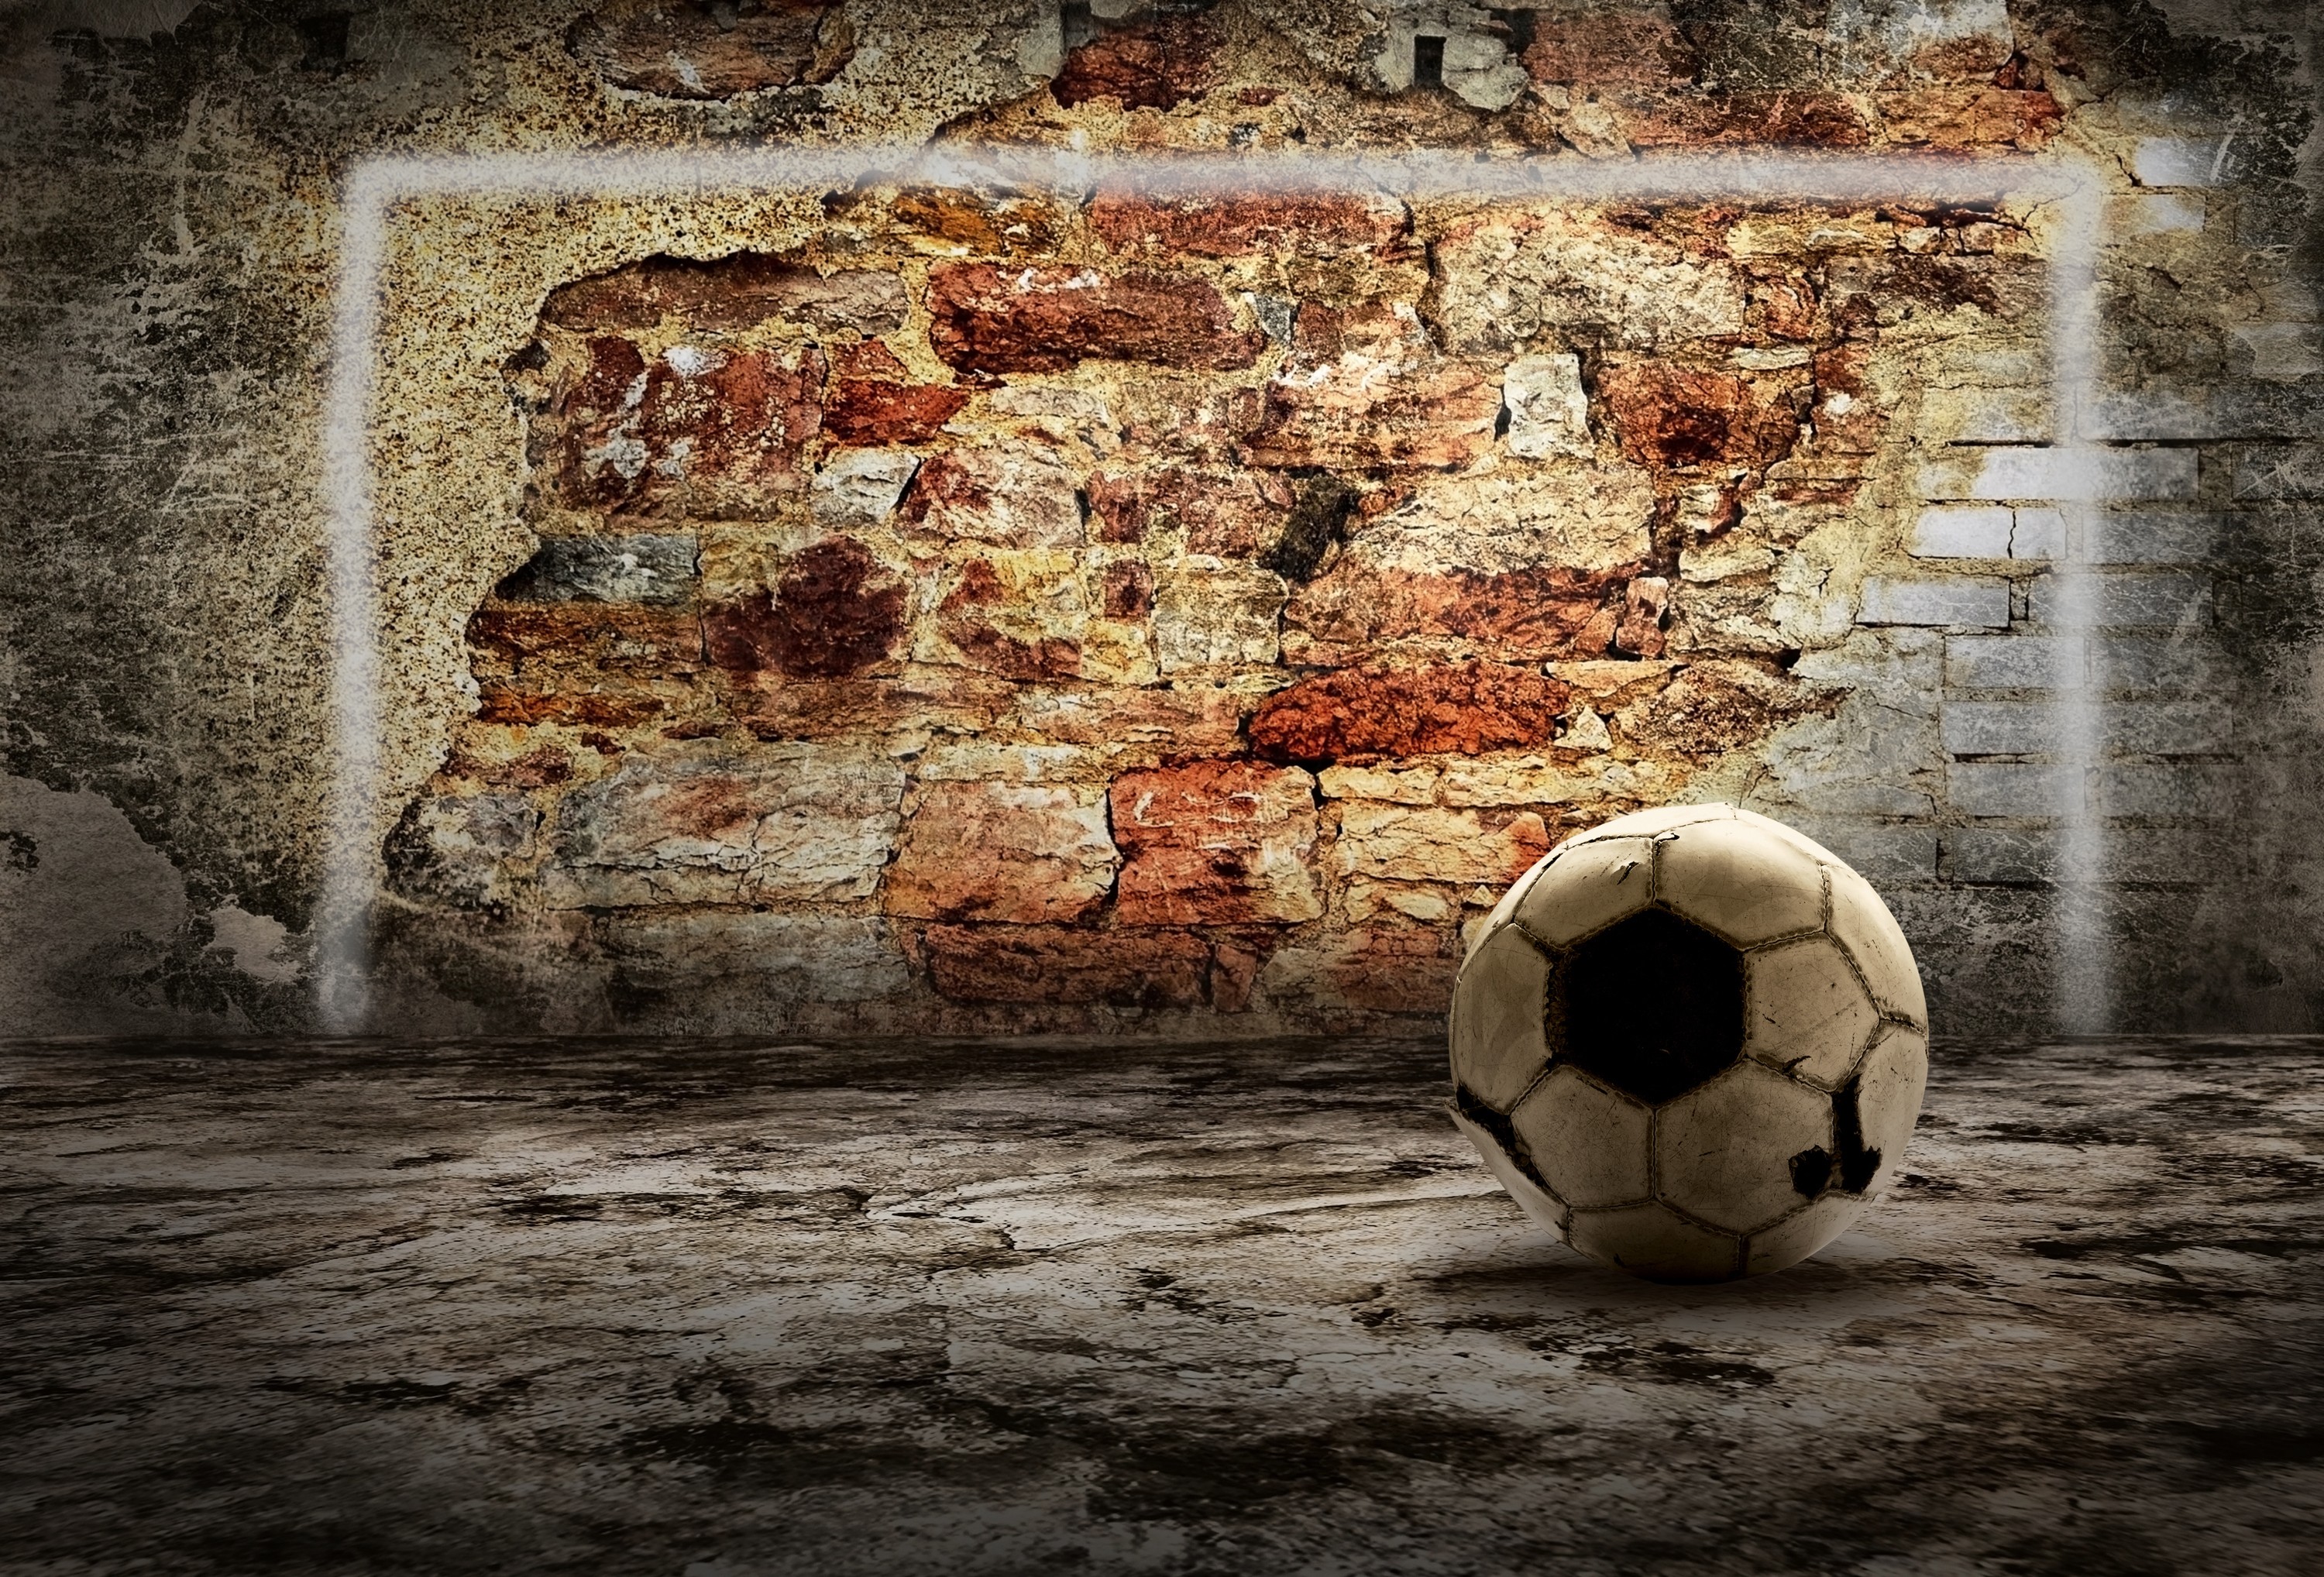 sports wallpaper for walls,football,soccer ball,ball,wall,brick